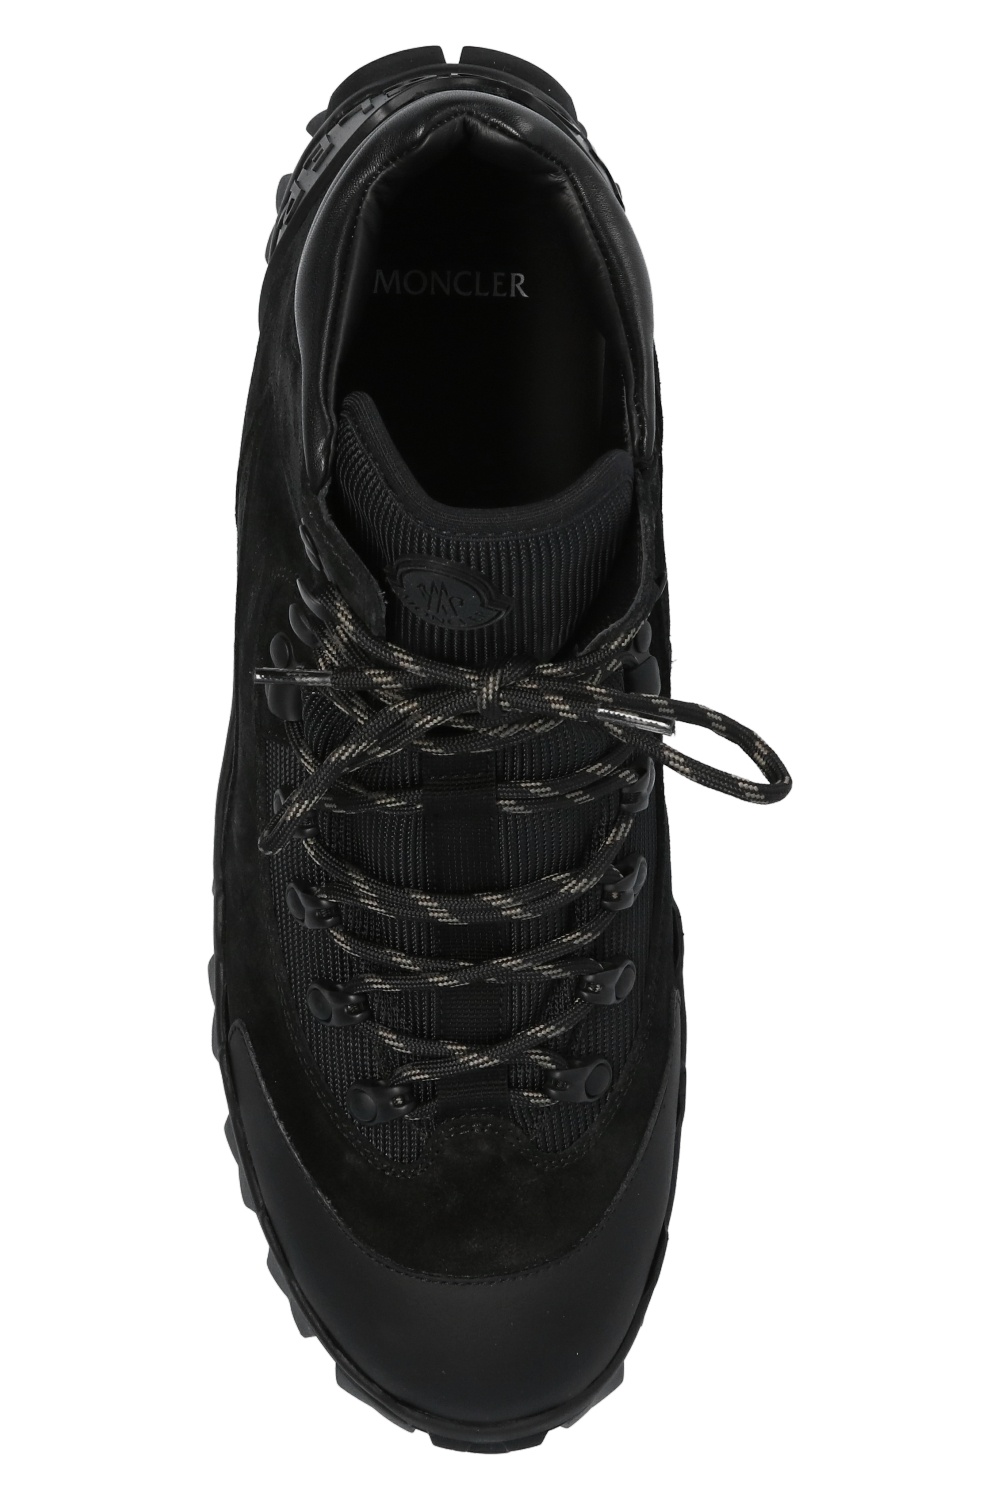 Moncler 'Herlot' hiking boots | Men's Shoes | Vitkac